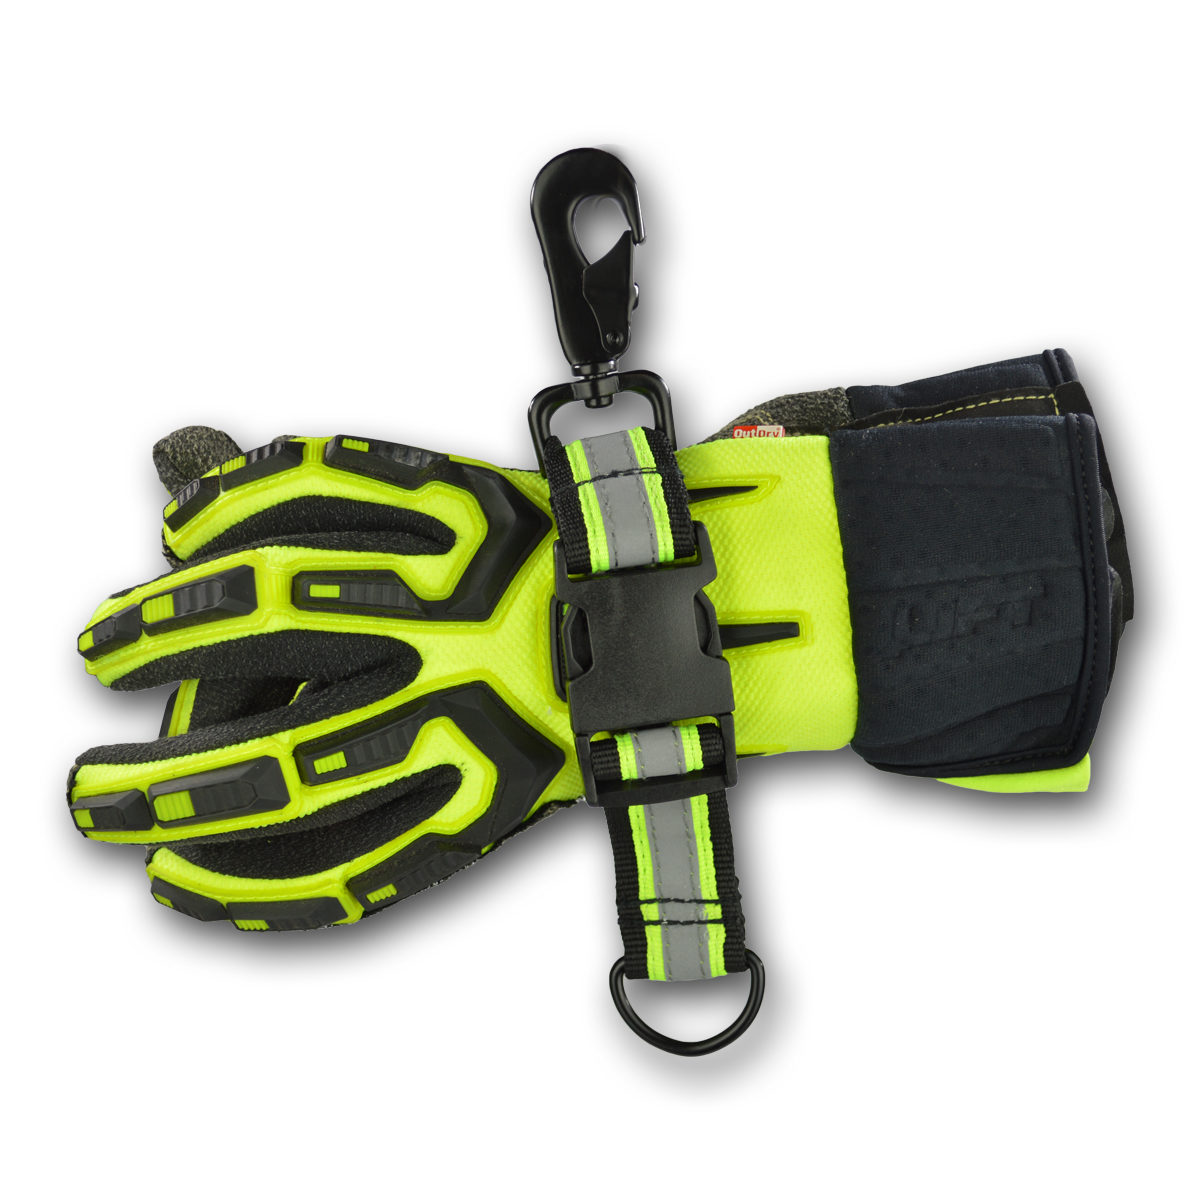 adjustable reflective glove holder for extrication gloves strap rescue